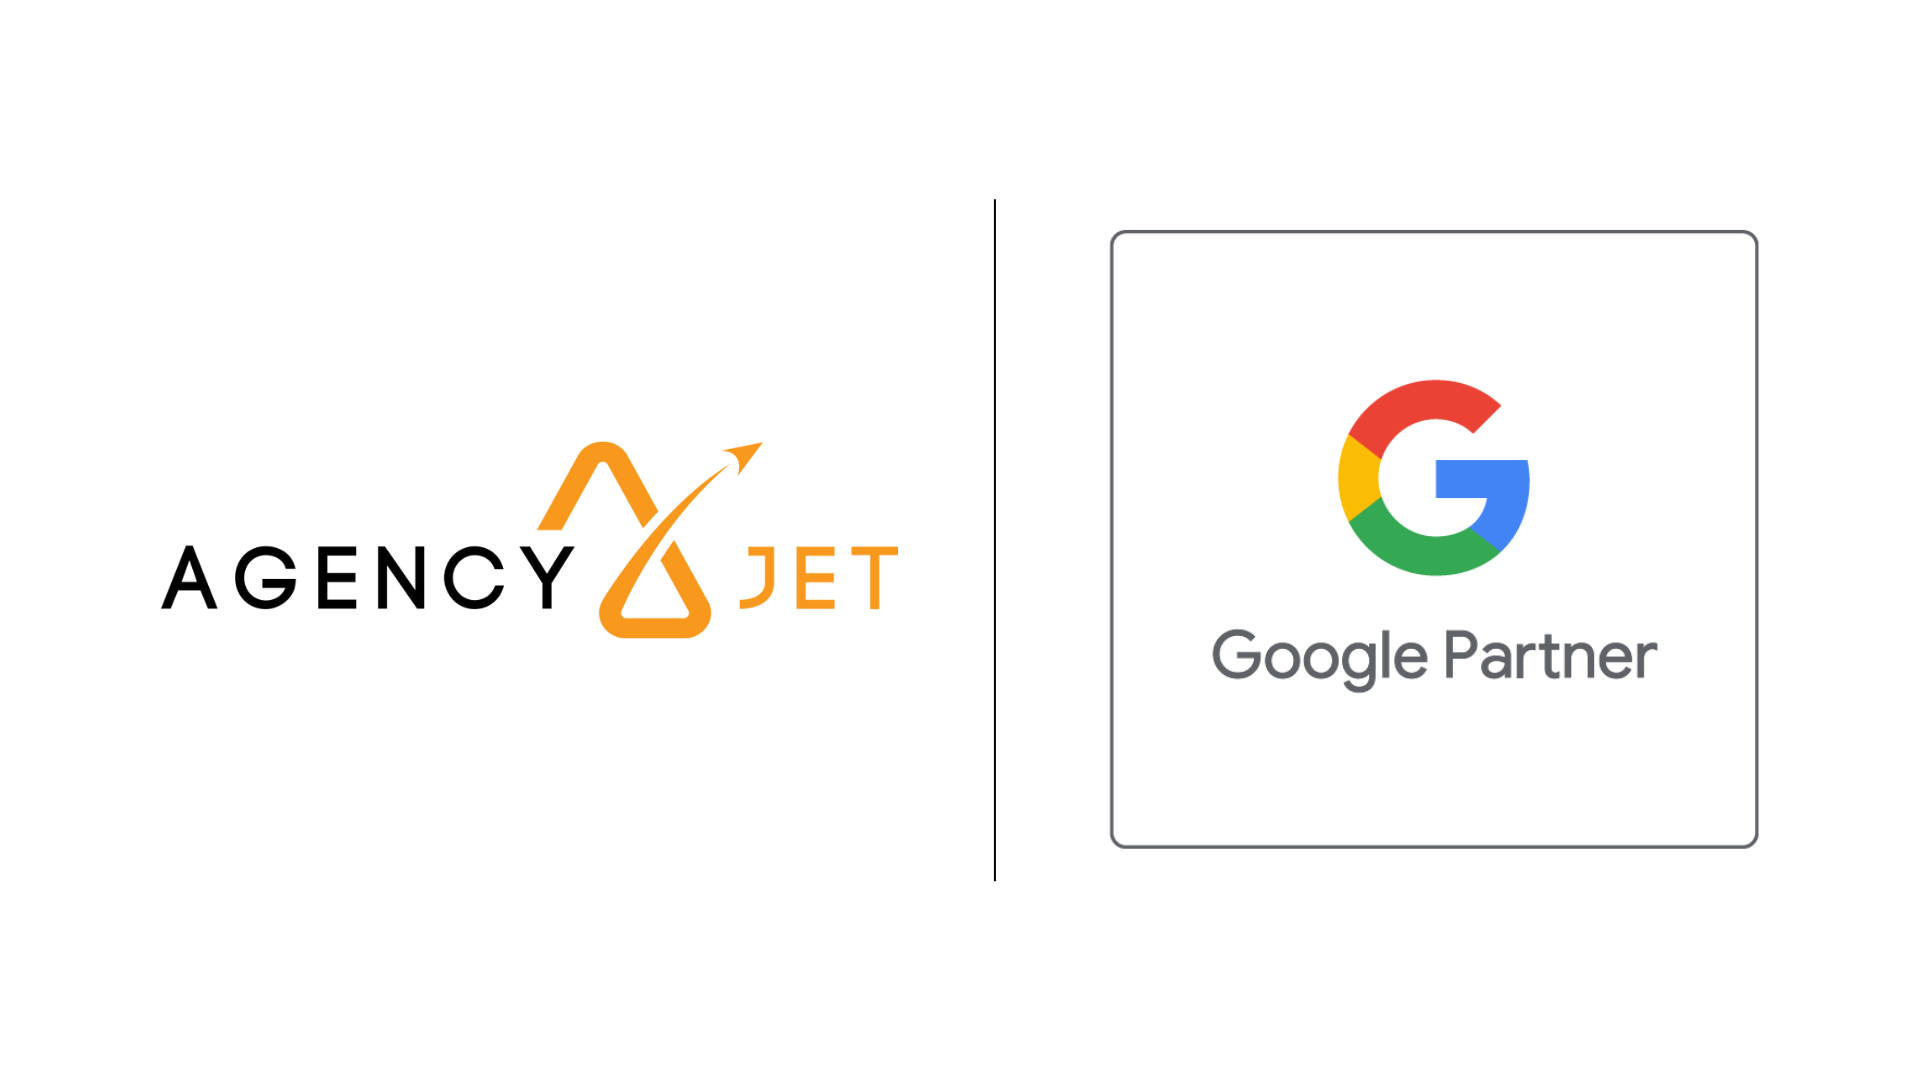 google partner - agency jet (1)